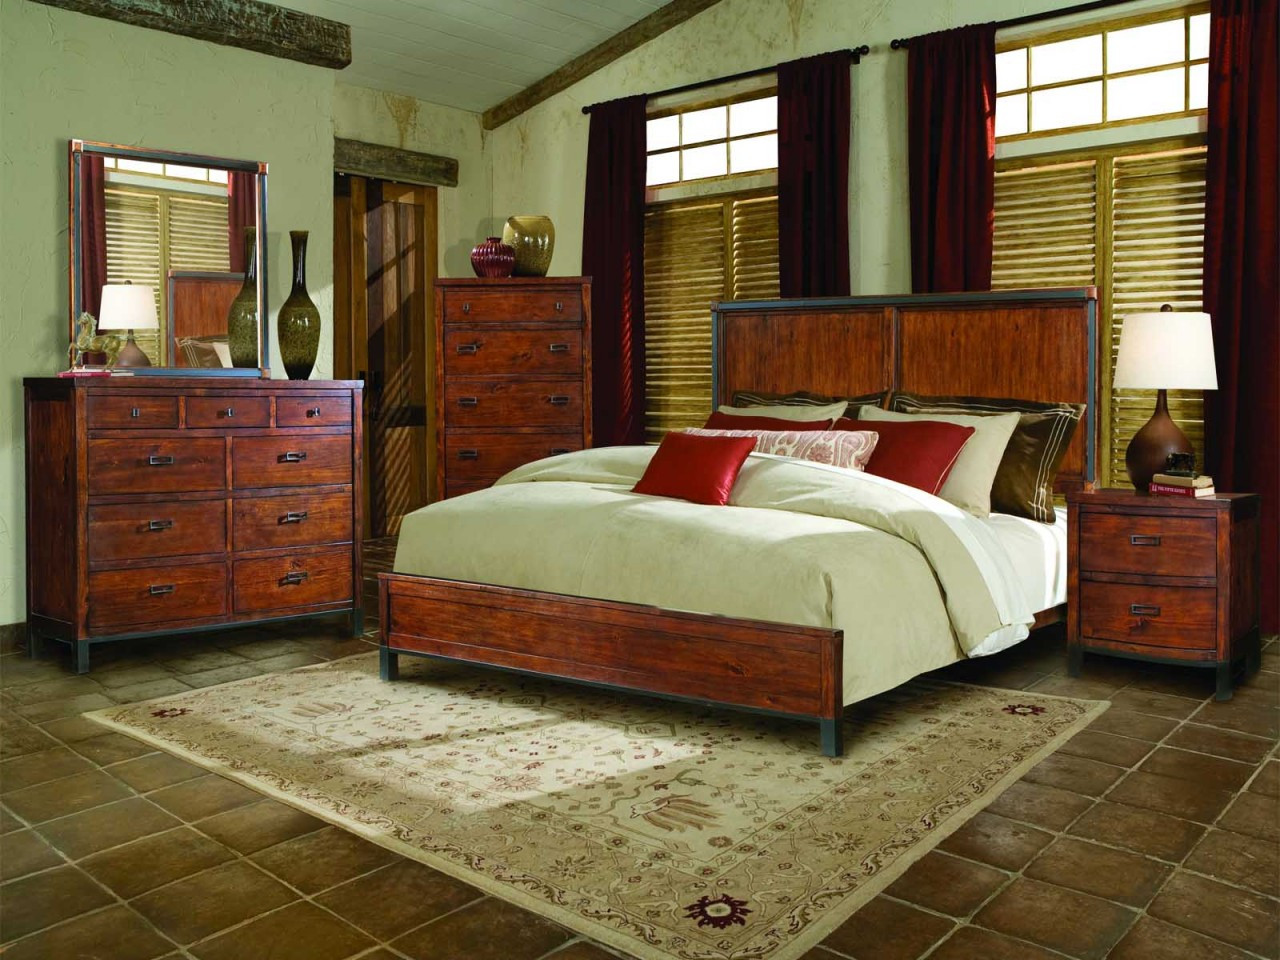 Rustic Bedroom Furniture
 Breathtaking Rustic Bedroom Furniture Sets with Warm